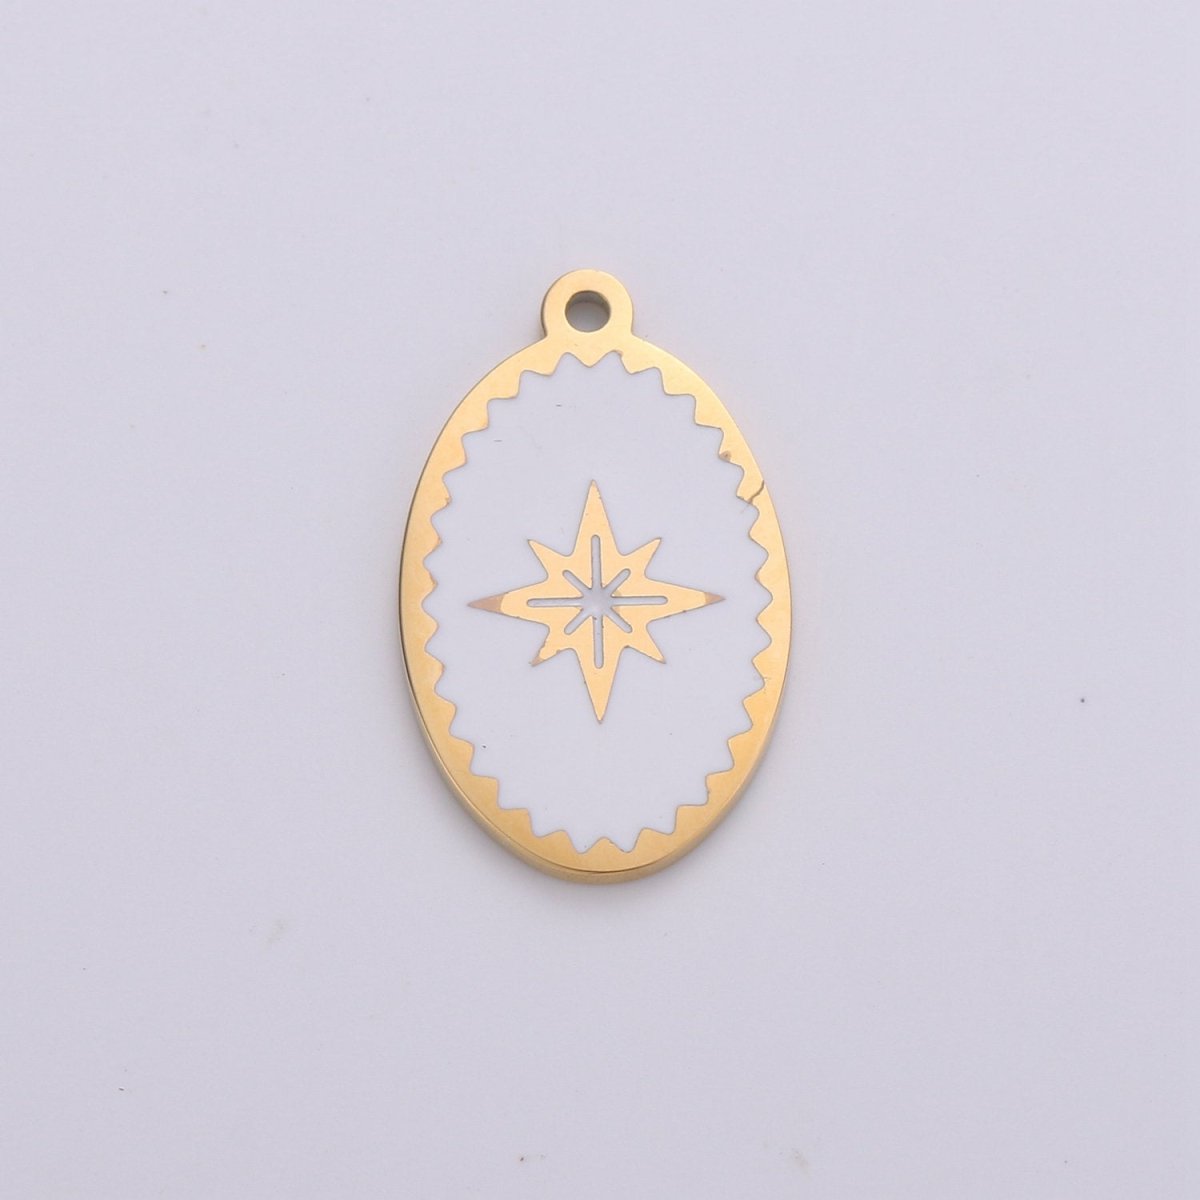 Dainty Gold North Star Pendant 24k Gold Filled Starburst Charm Pink Teal black White Enamel Celestial Jewelry Minimalist Jewelry E-684-E-687 - DLUXCA